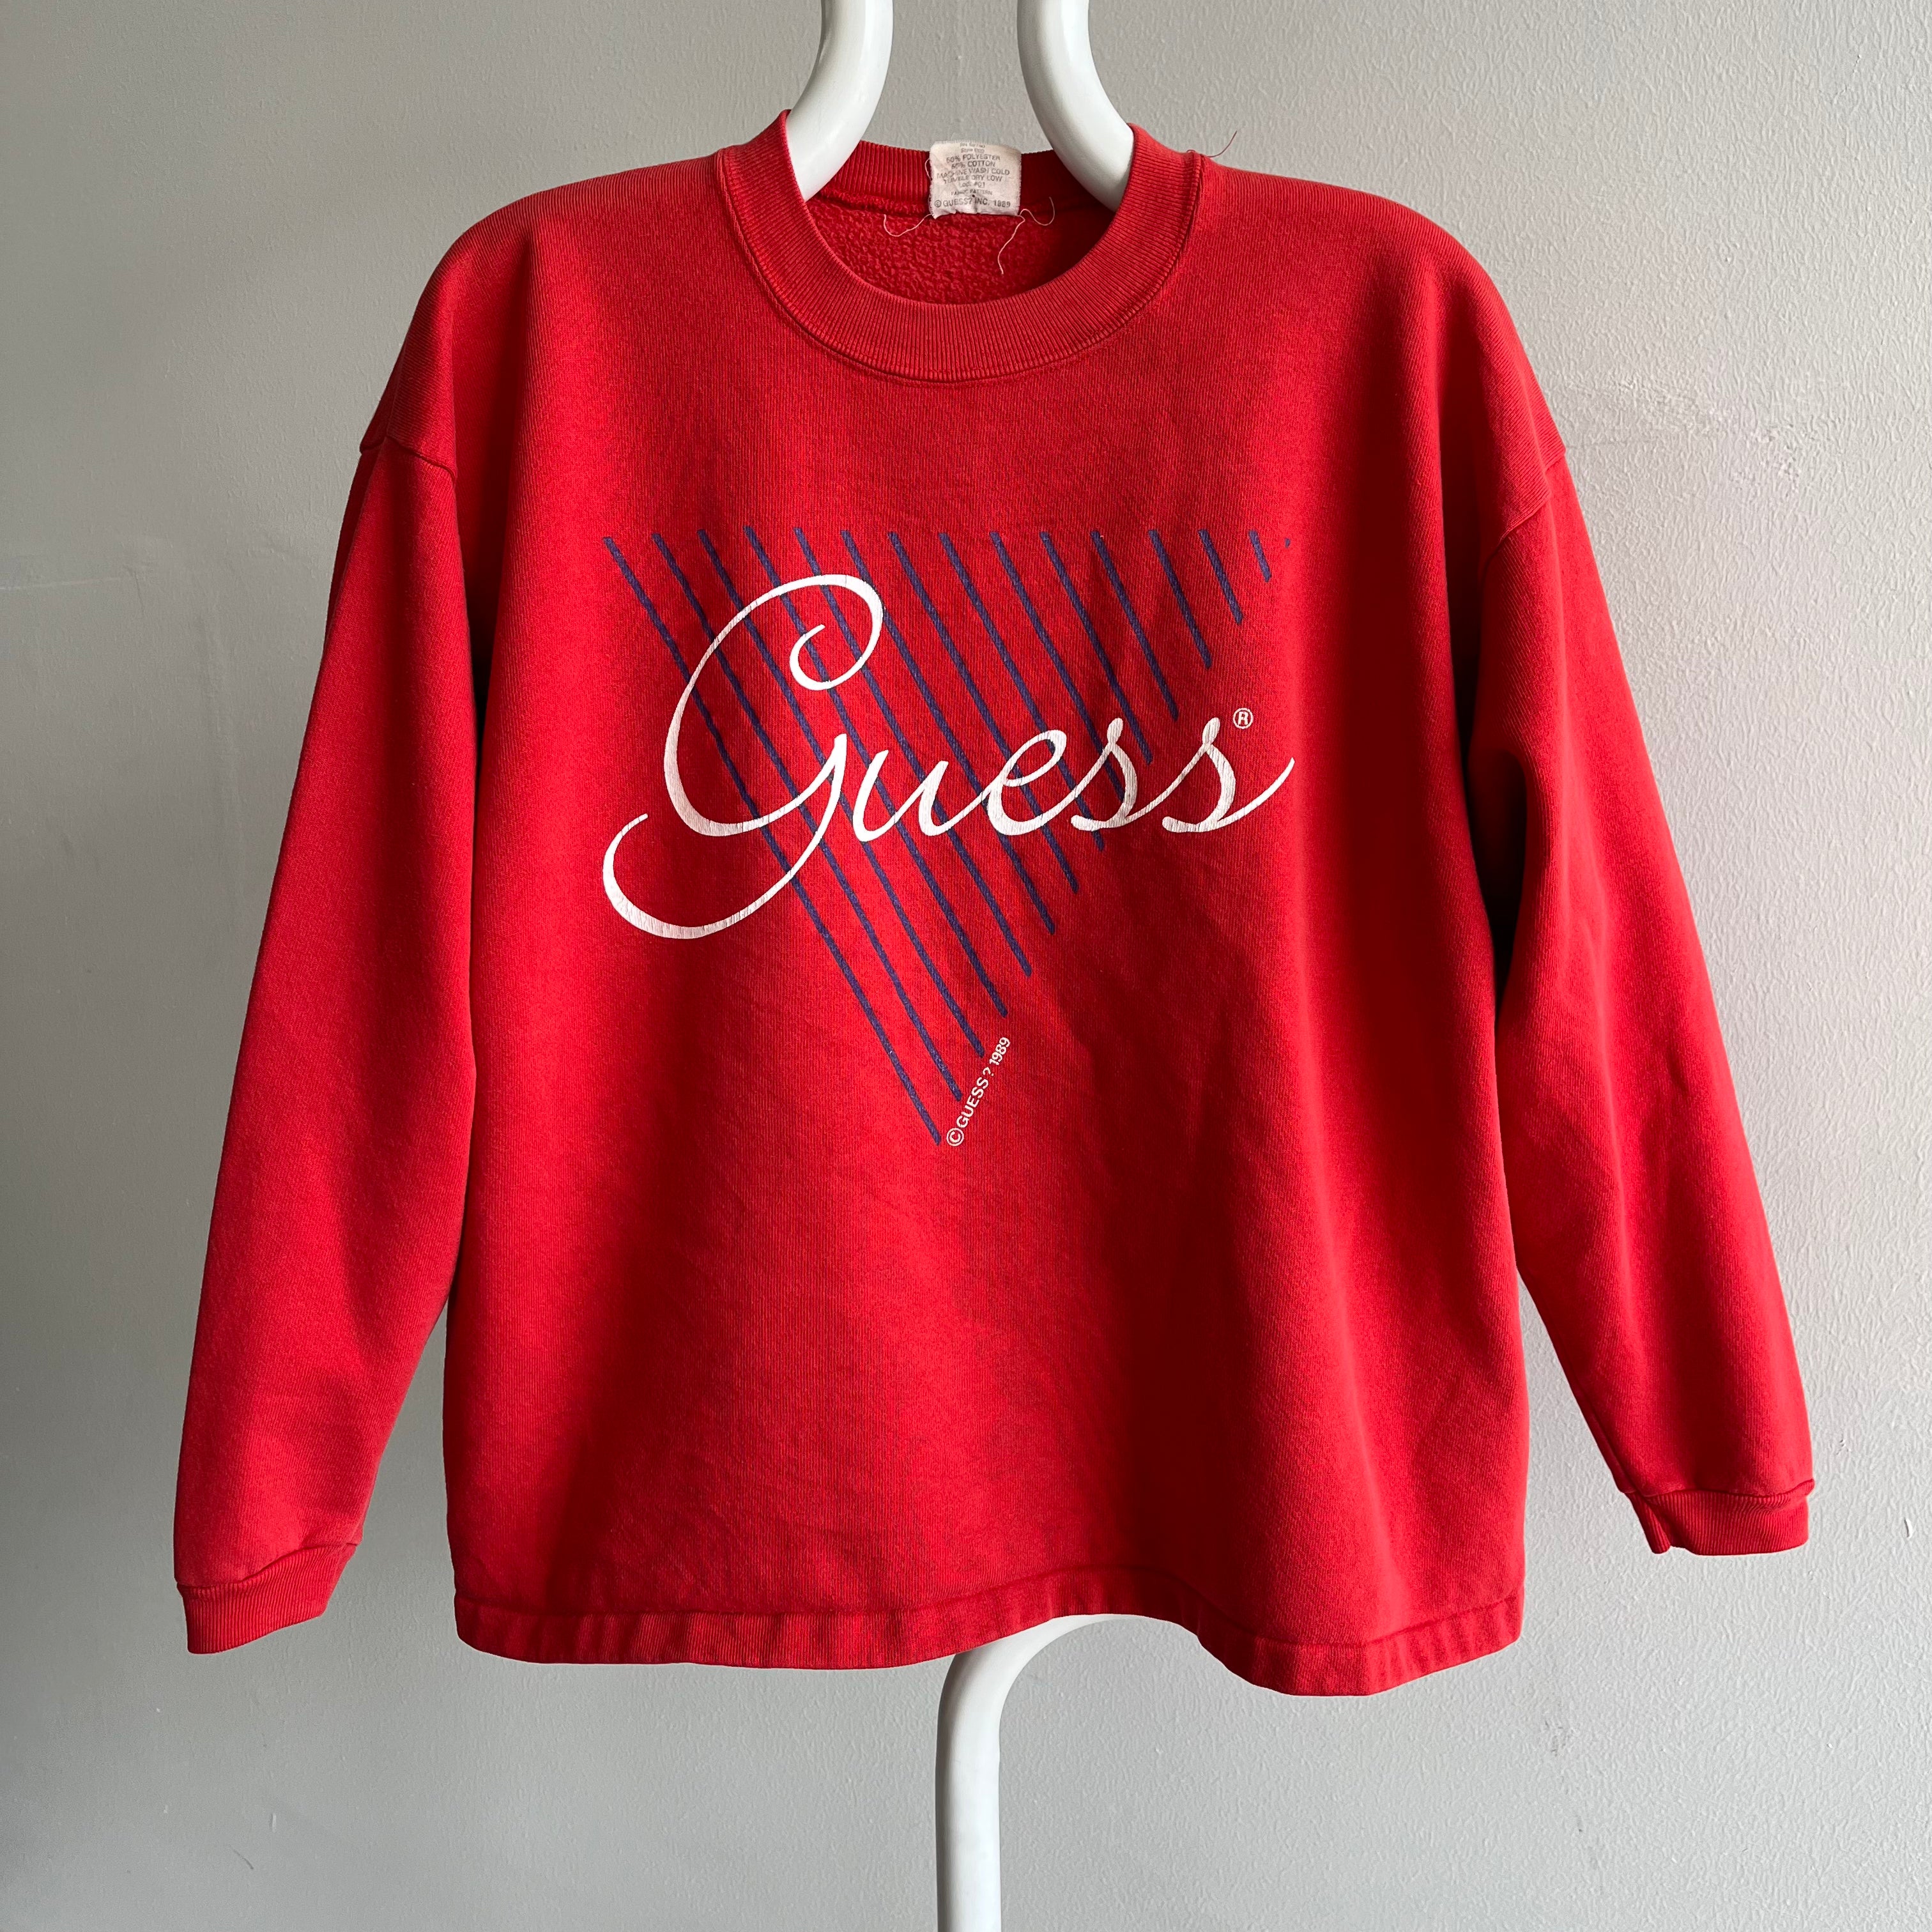 1989 Guess Sweatshirt - Like, OMG